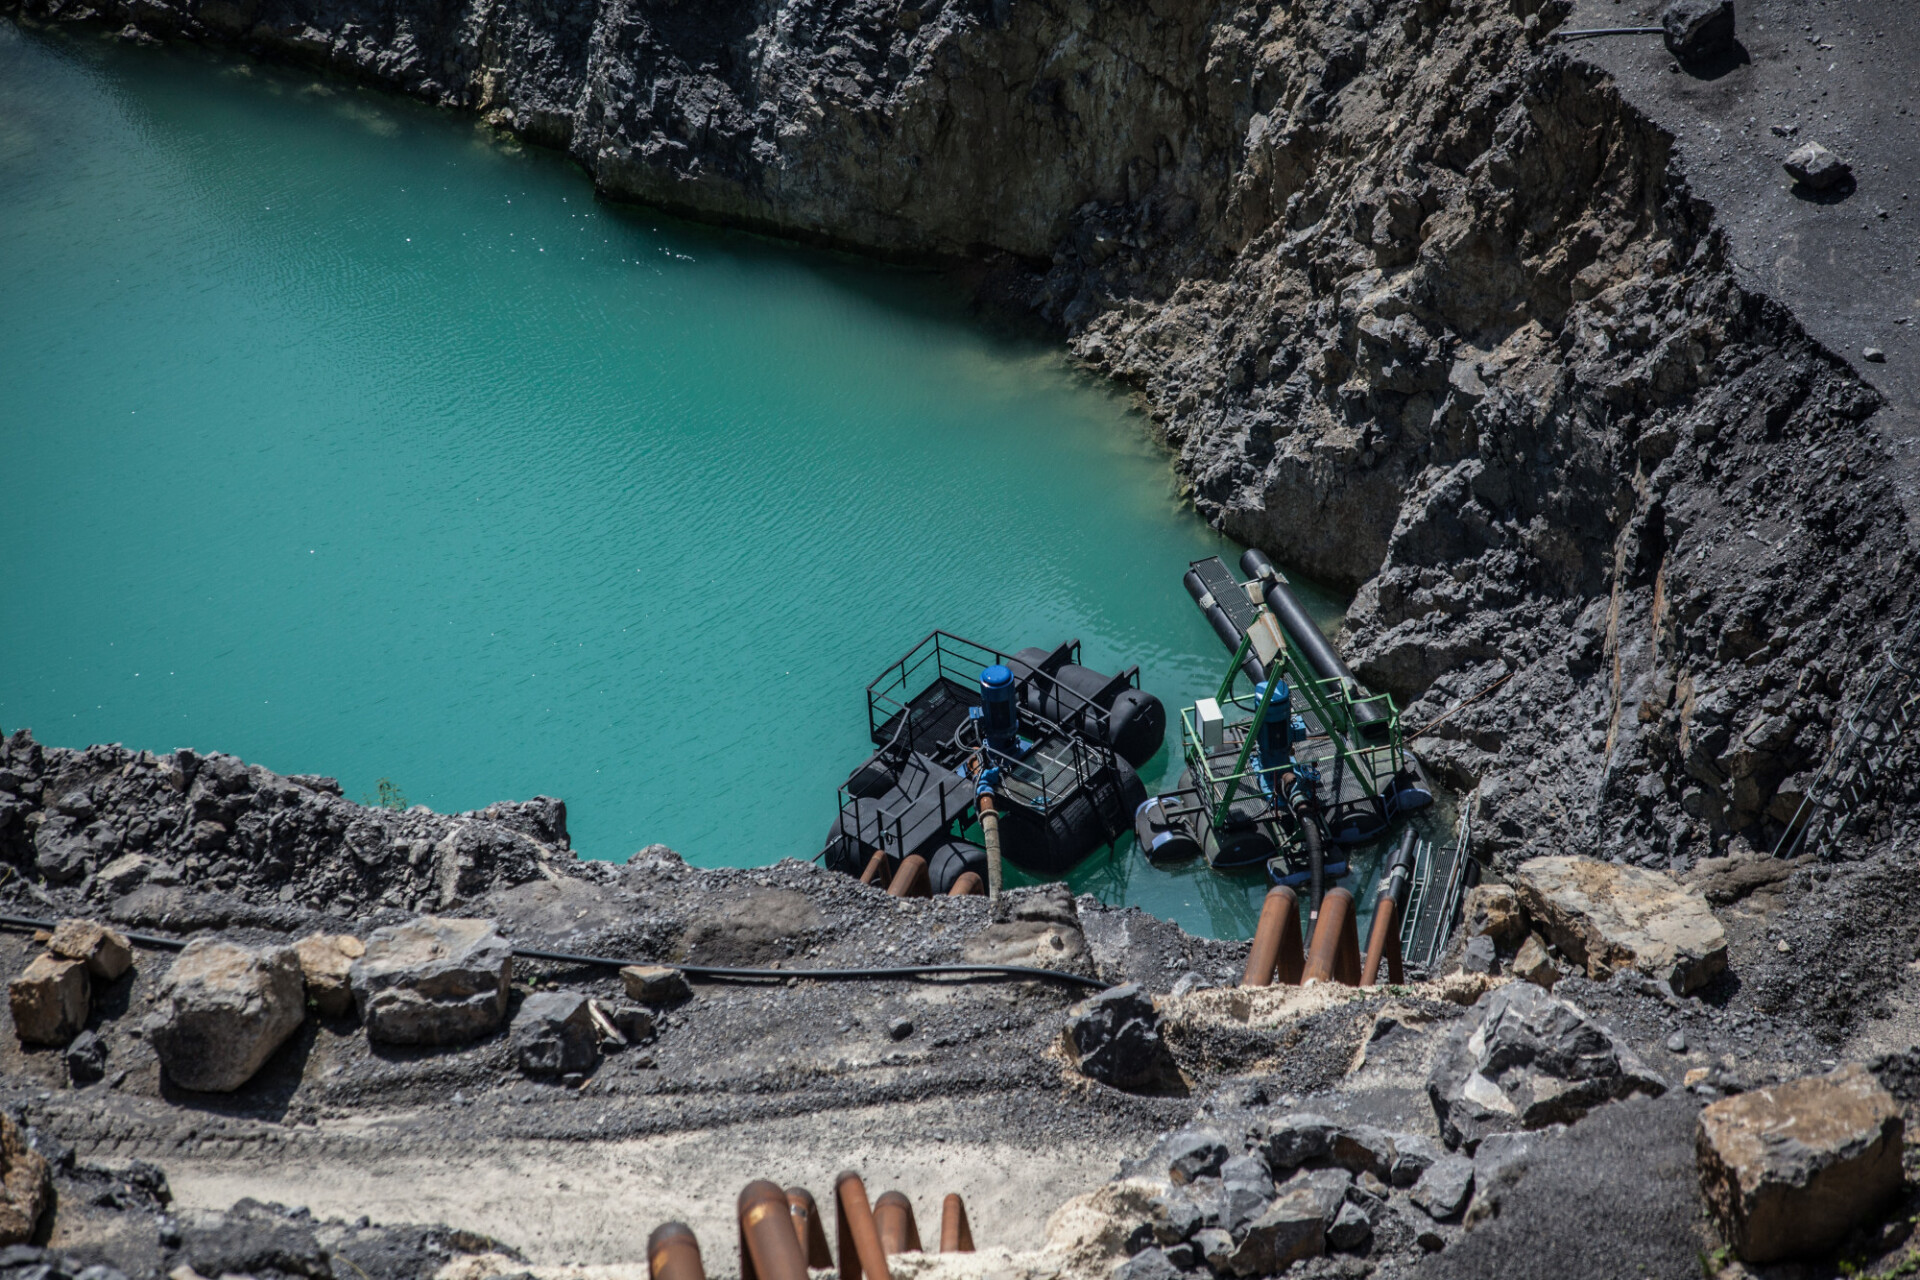 Pumps in a quarry